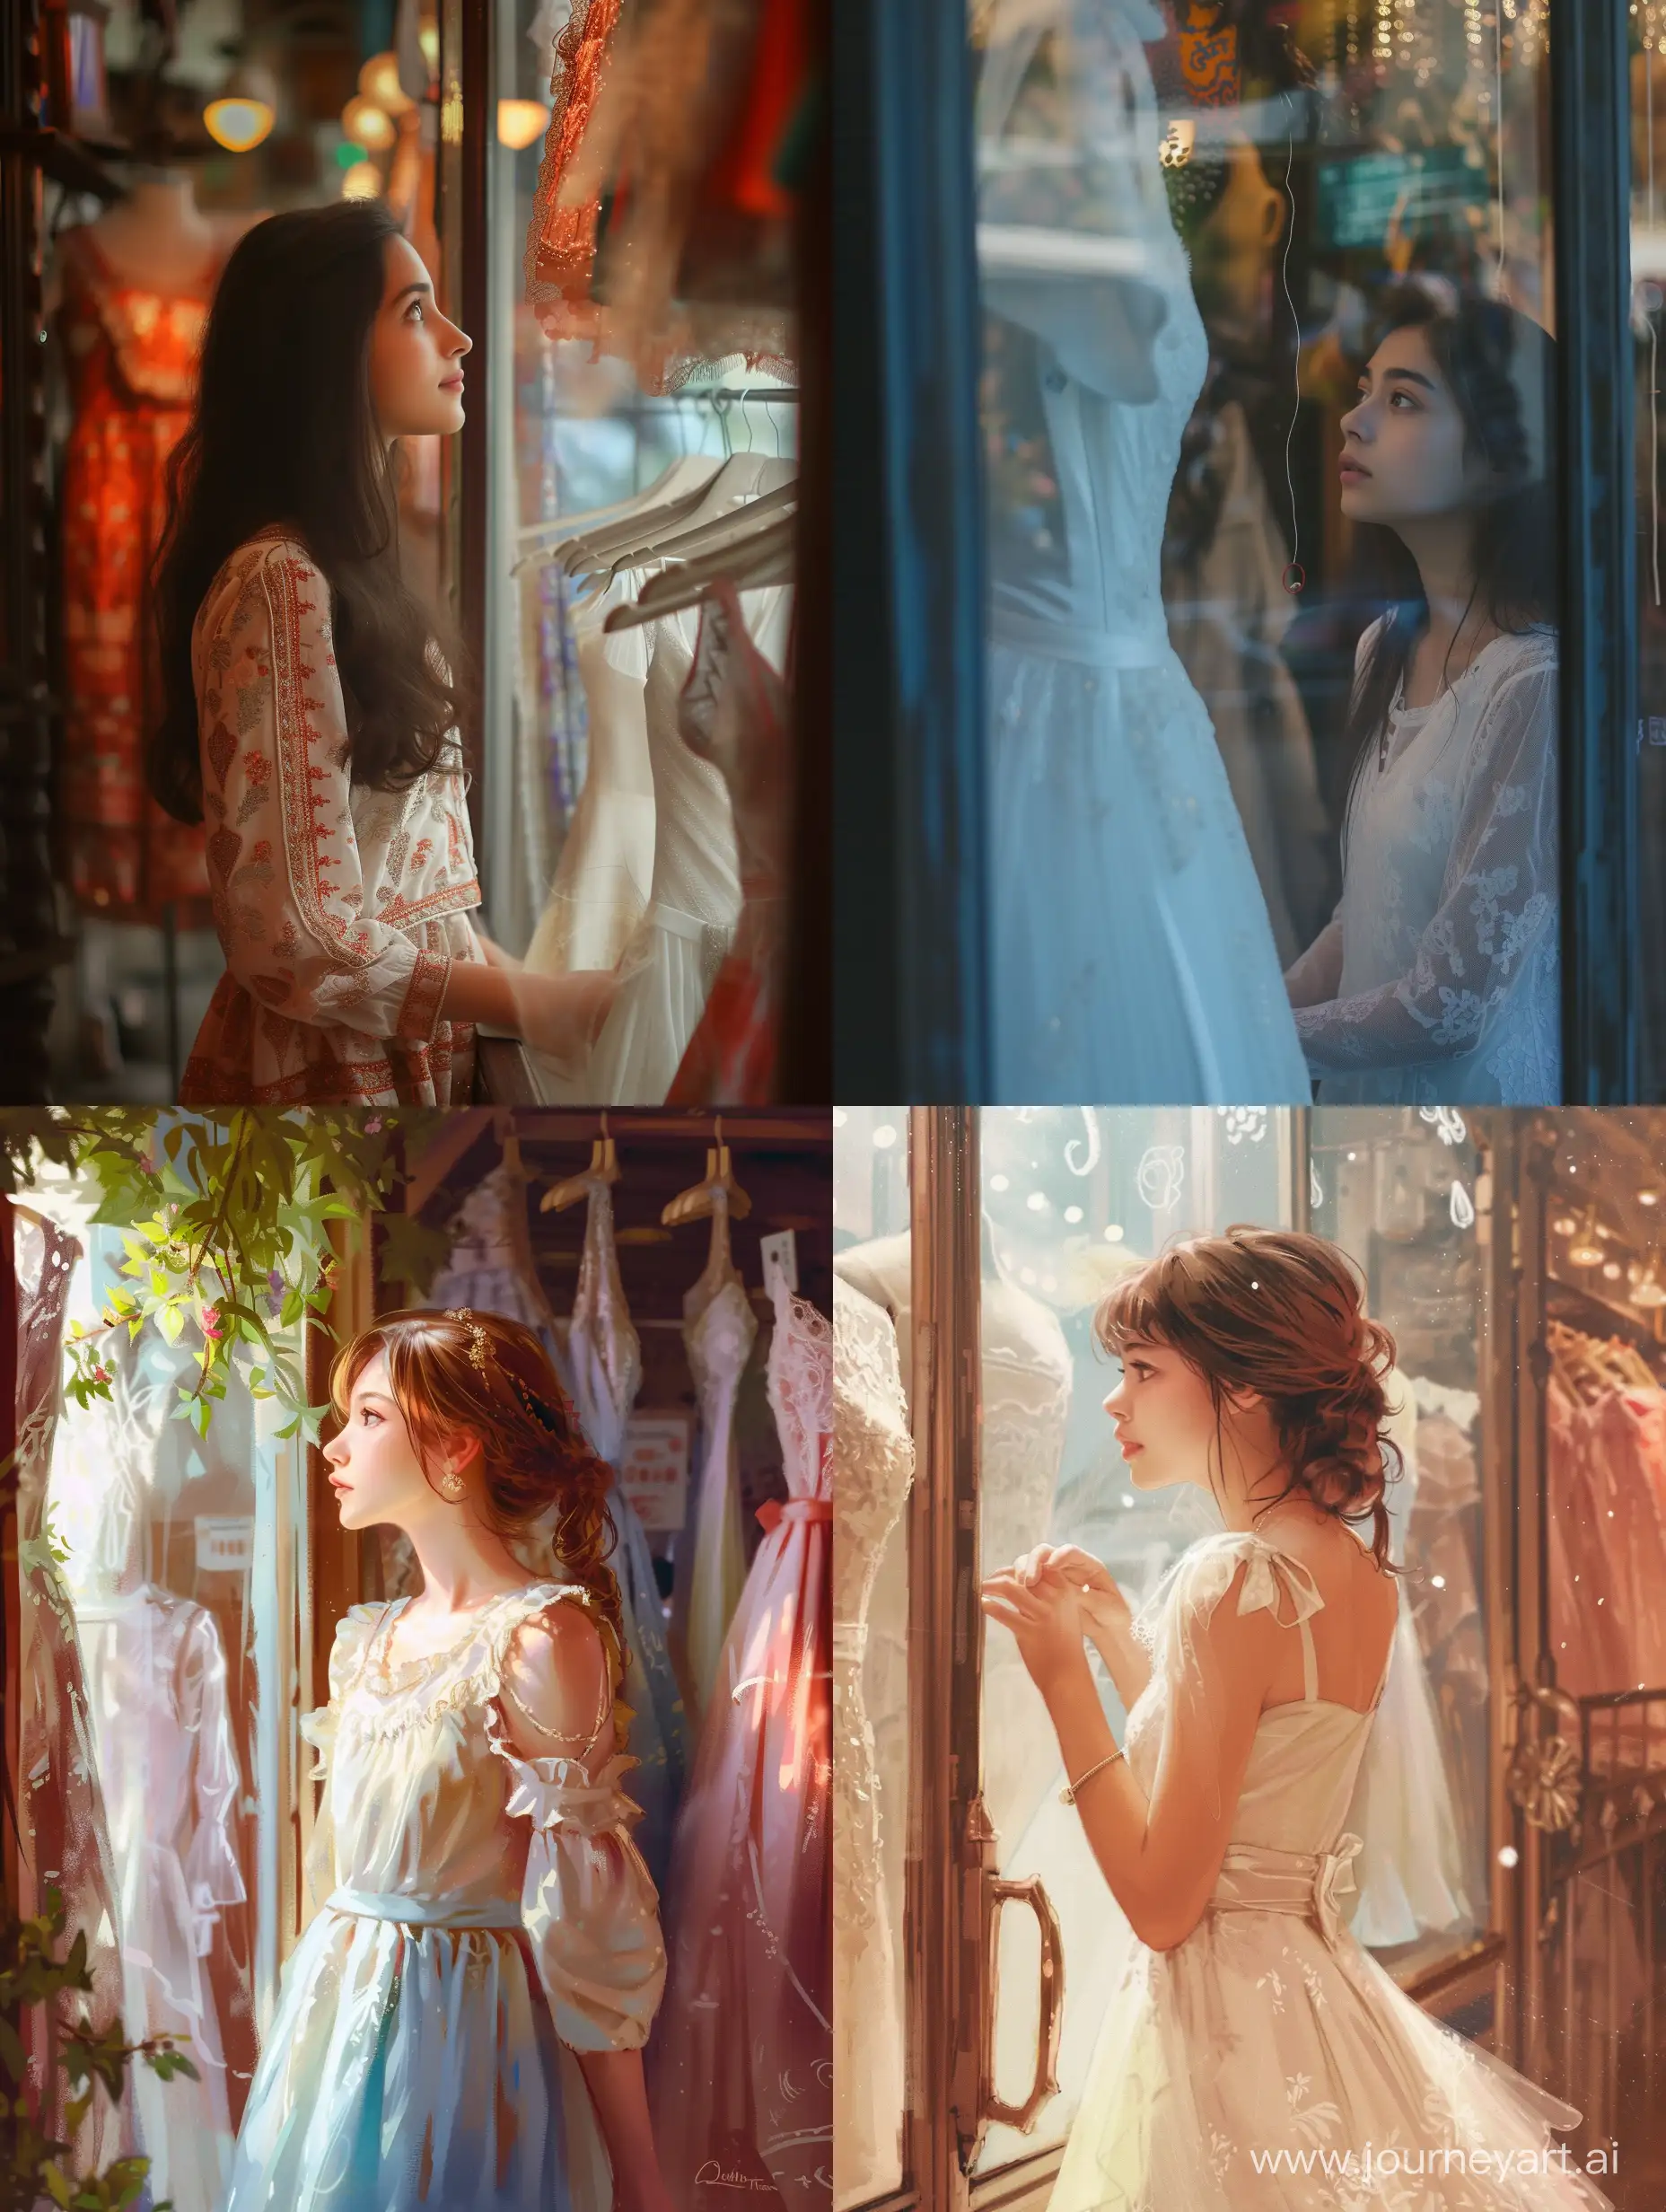 Charming-Girl-Admiring-Fashion-in-Boutique-Window